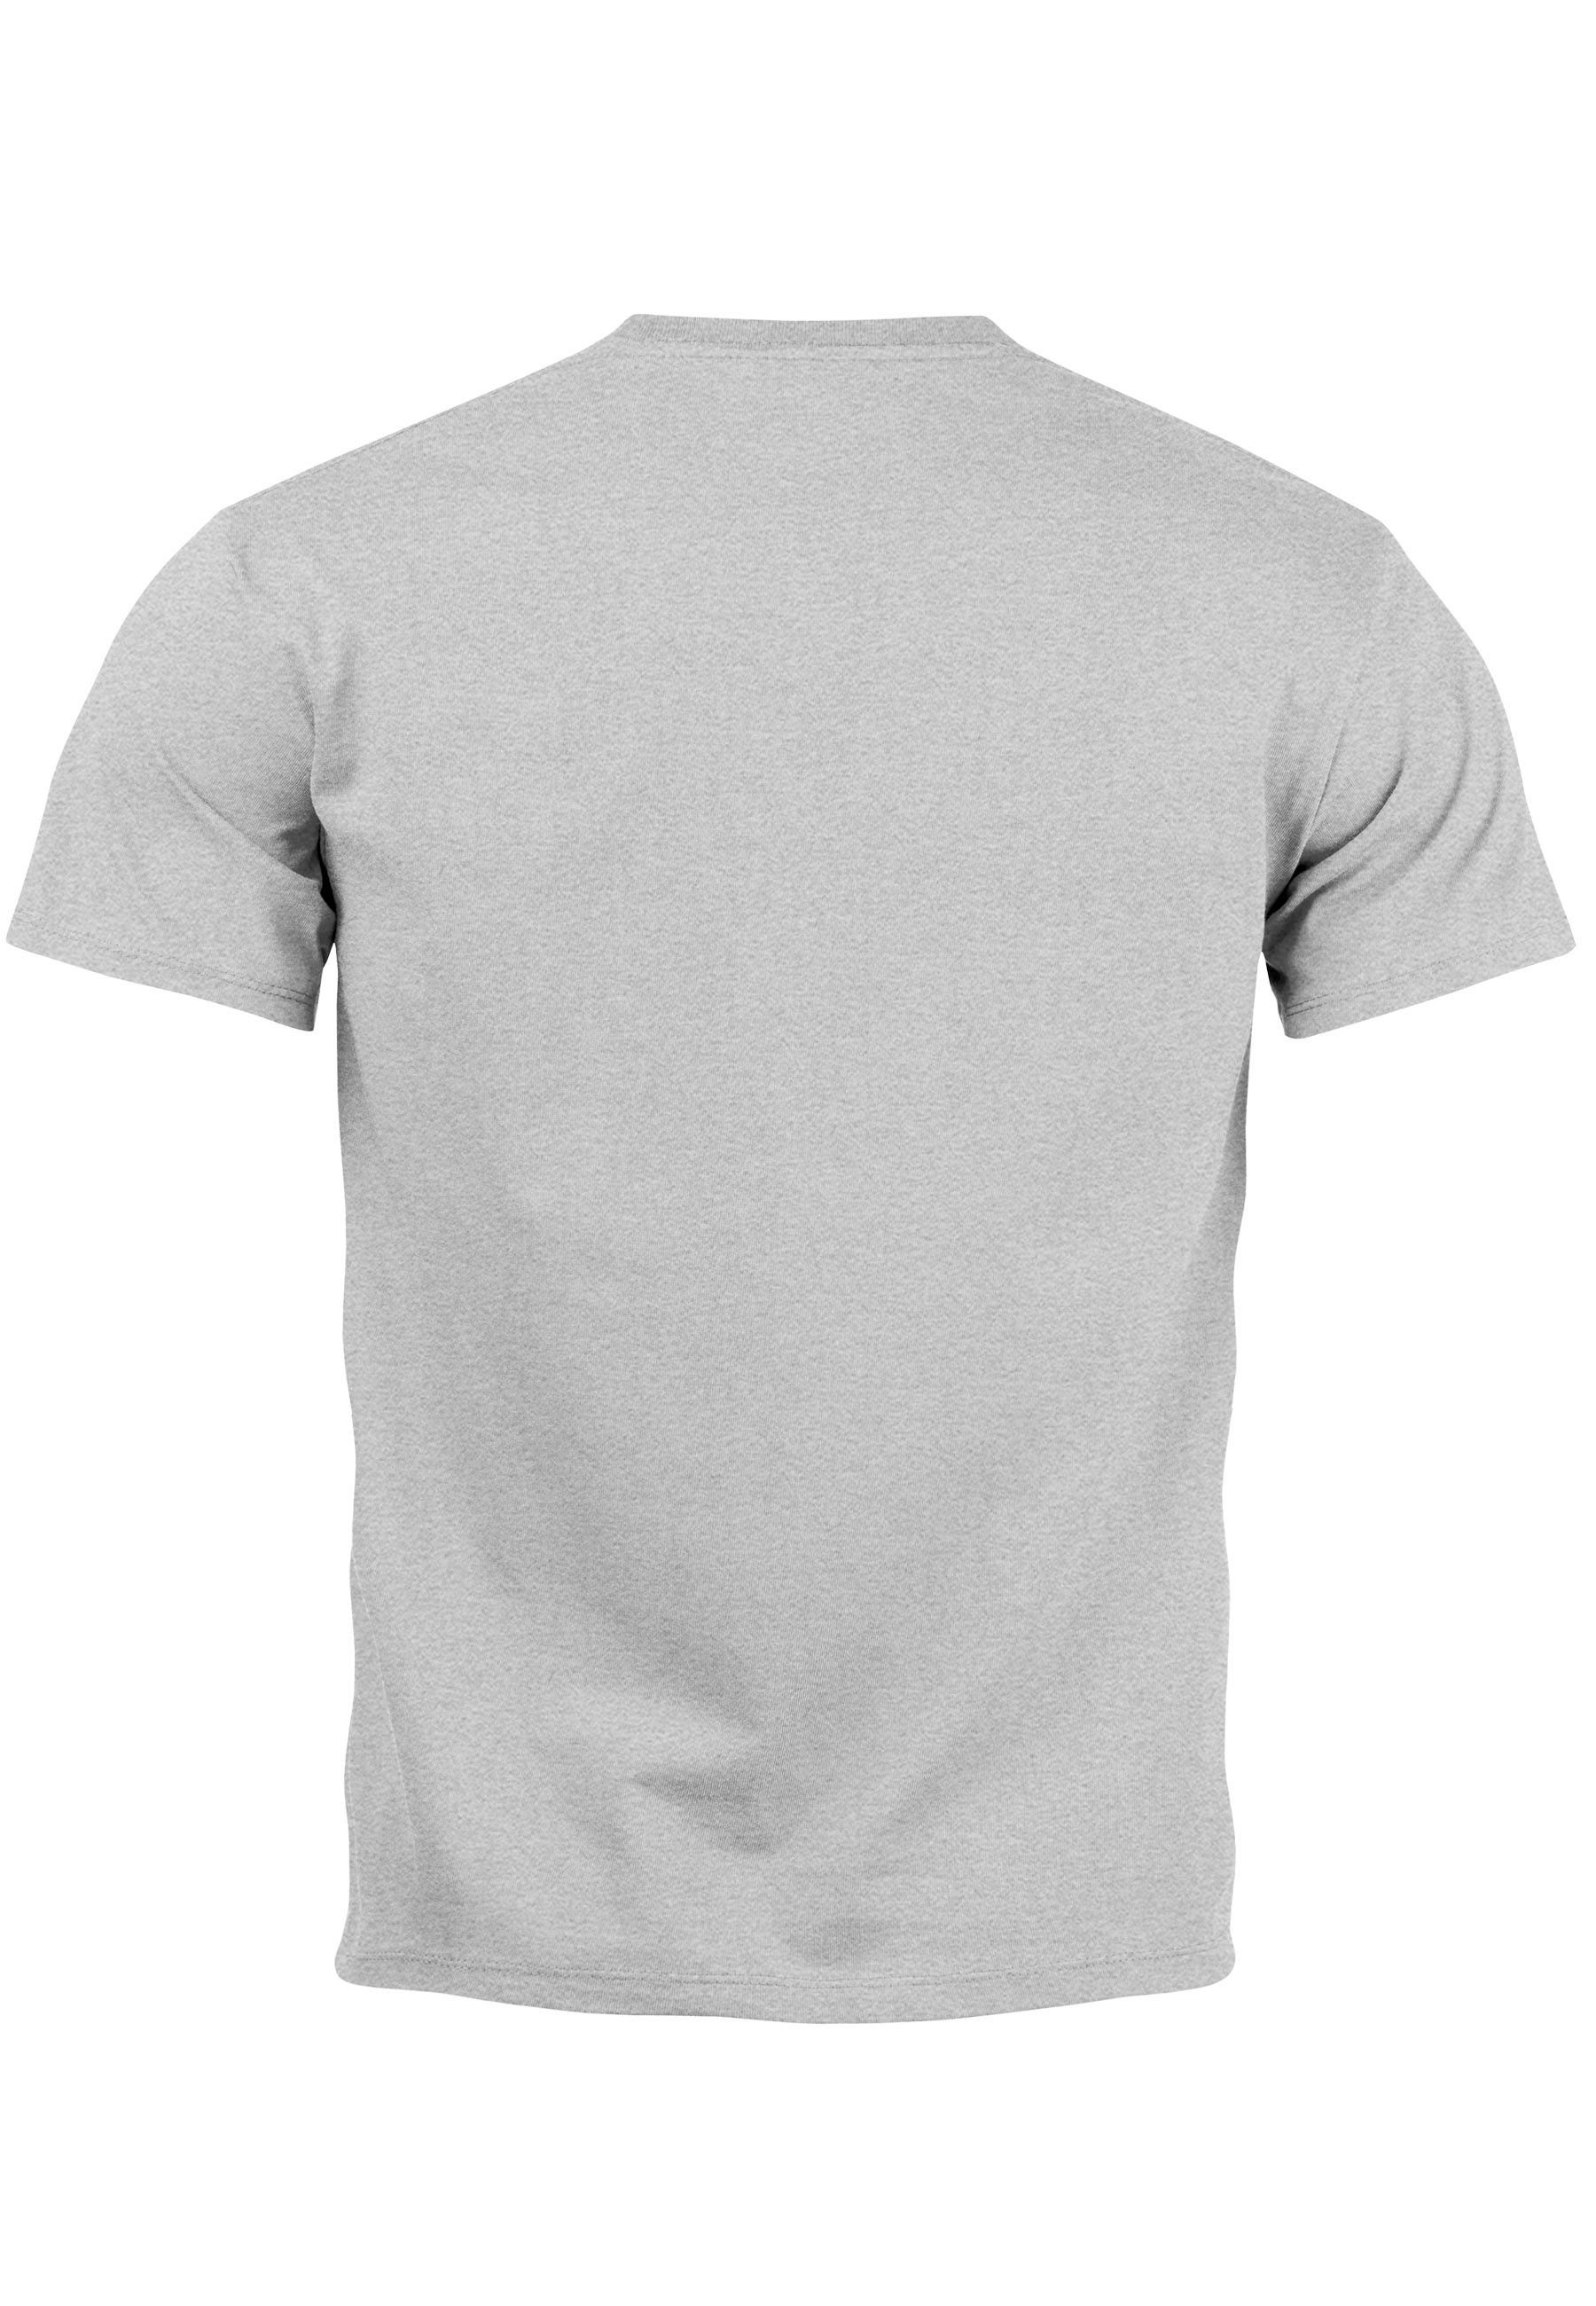 T-Shirt Print Design Herren Bär Polygon Polygon Fashion Print 2 Tiermotiv Neverless Outdoor mit Print-Shirt grau Bear